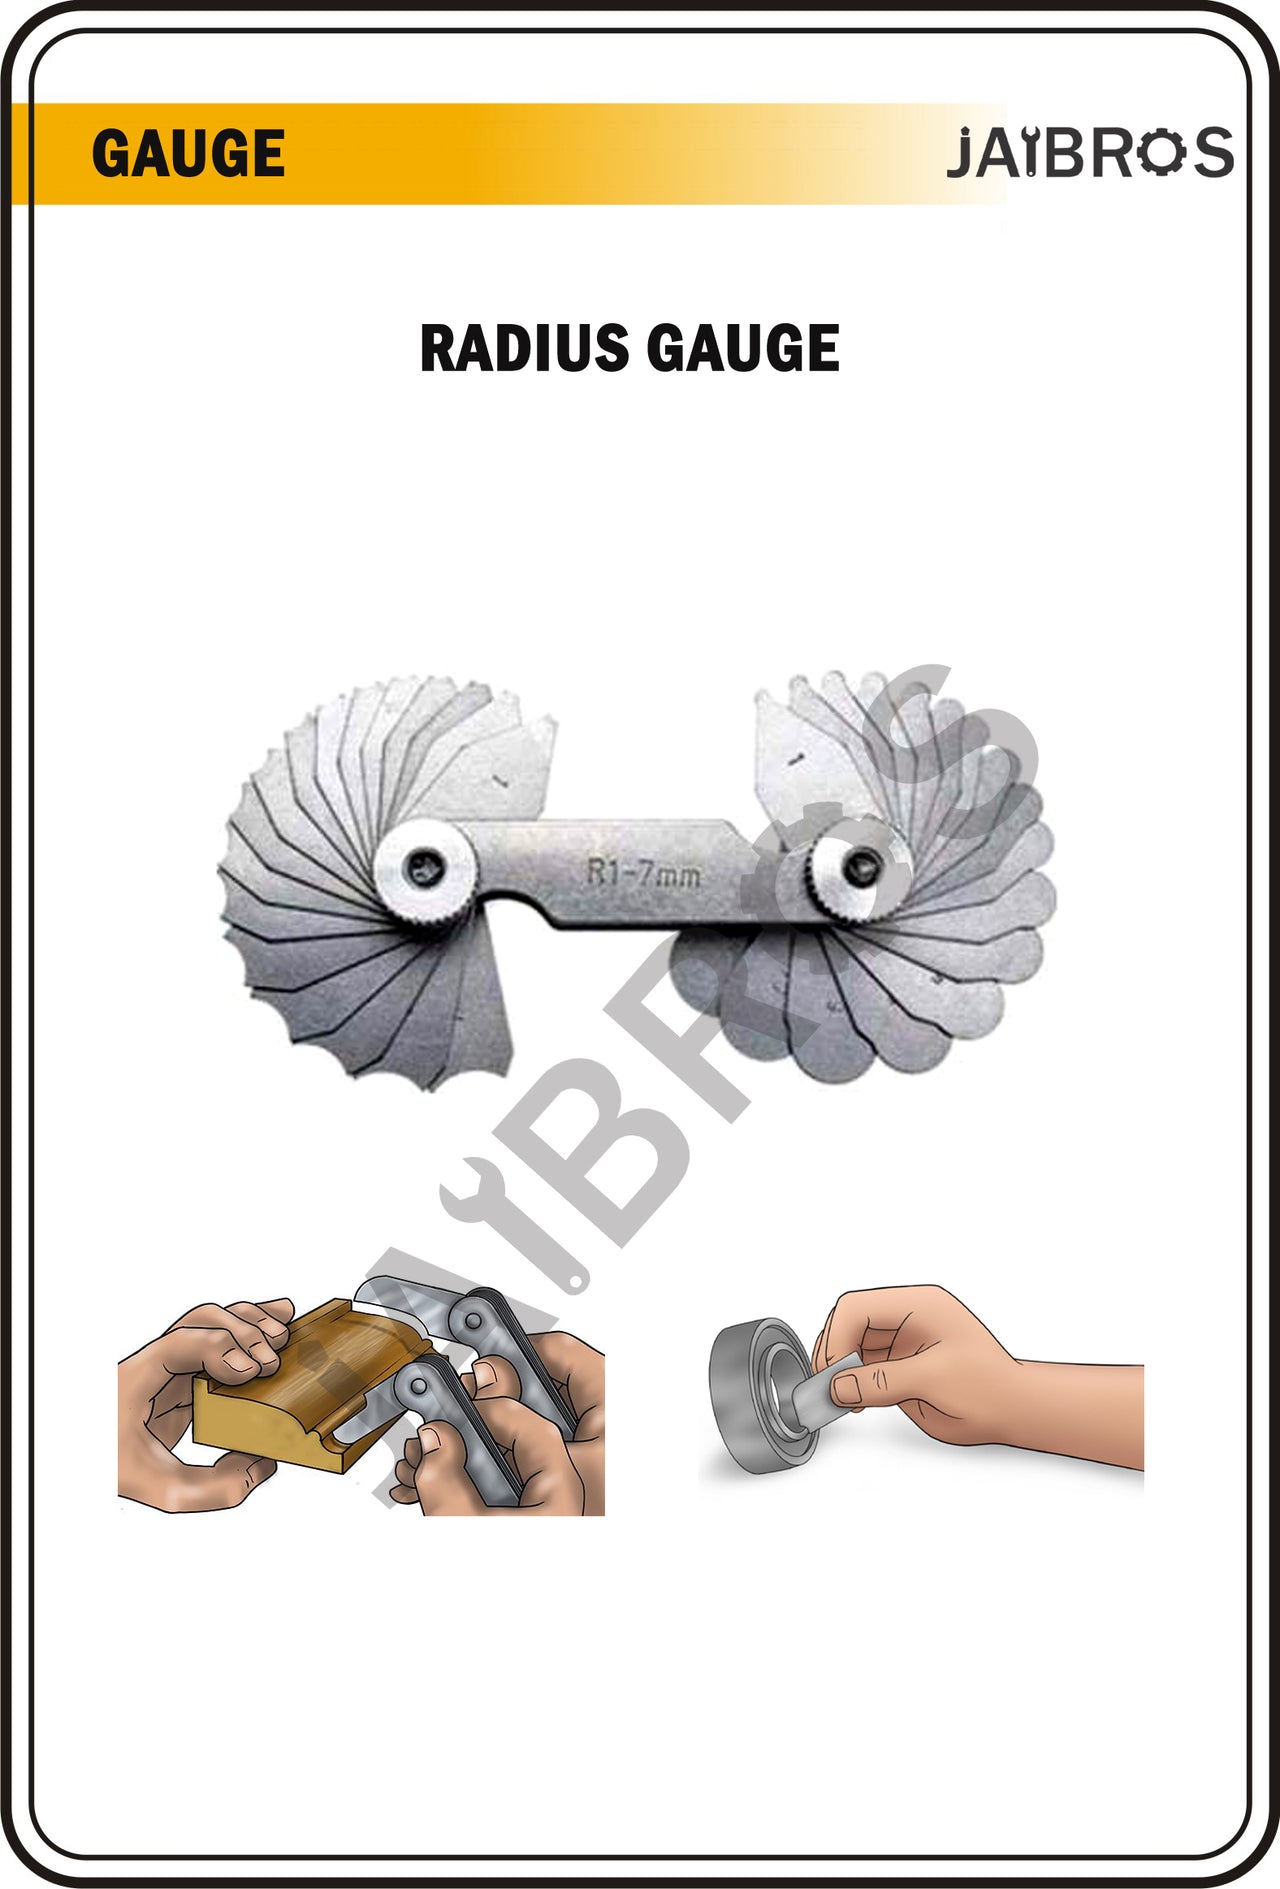 Radius gauge 1 mm to 7 mm